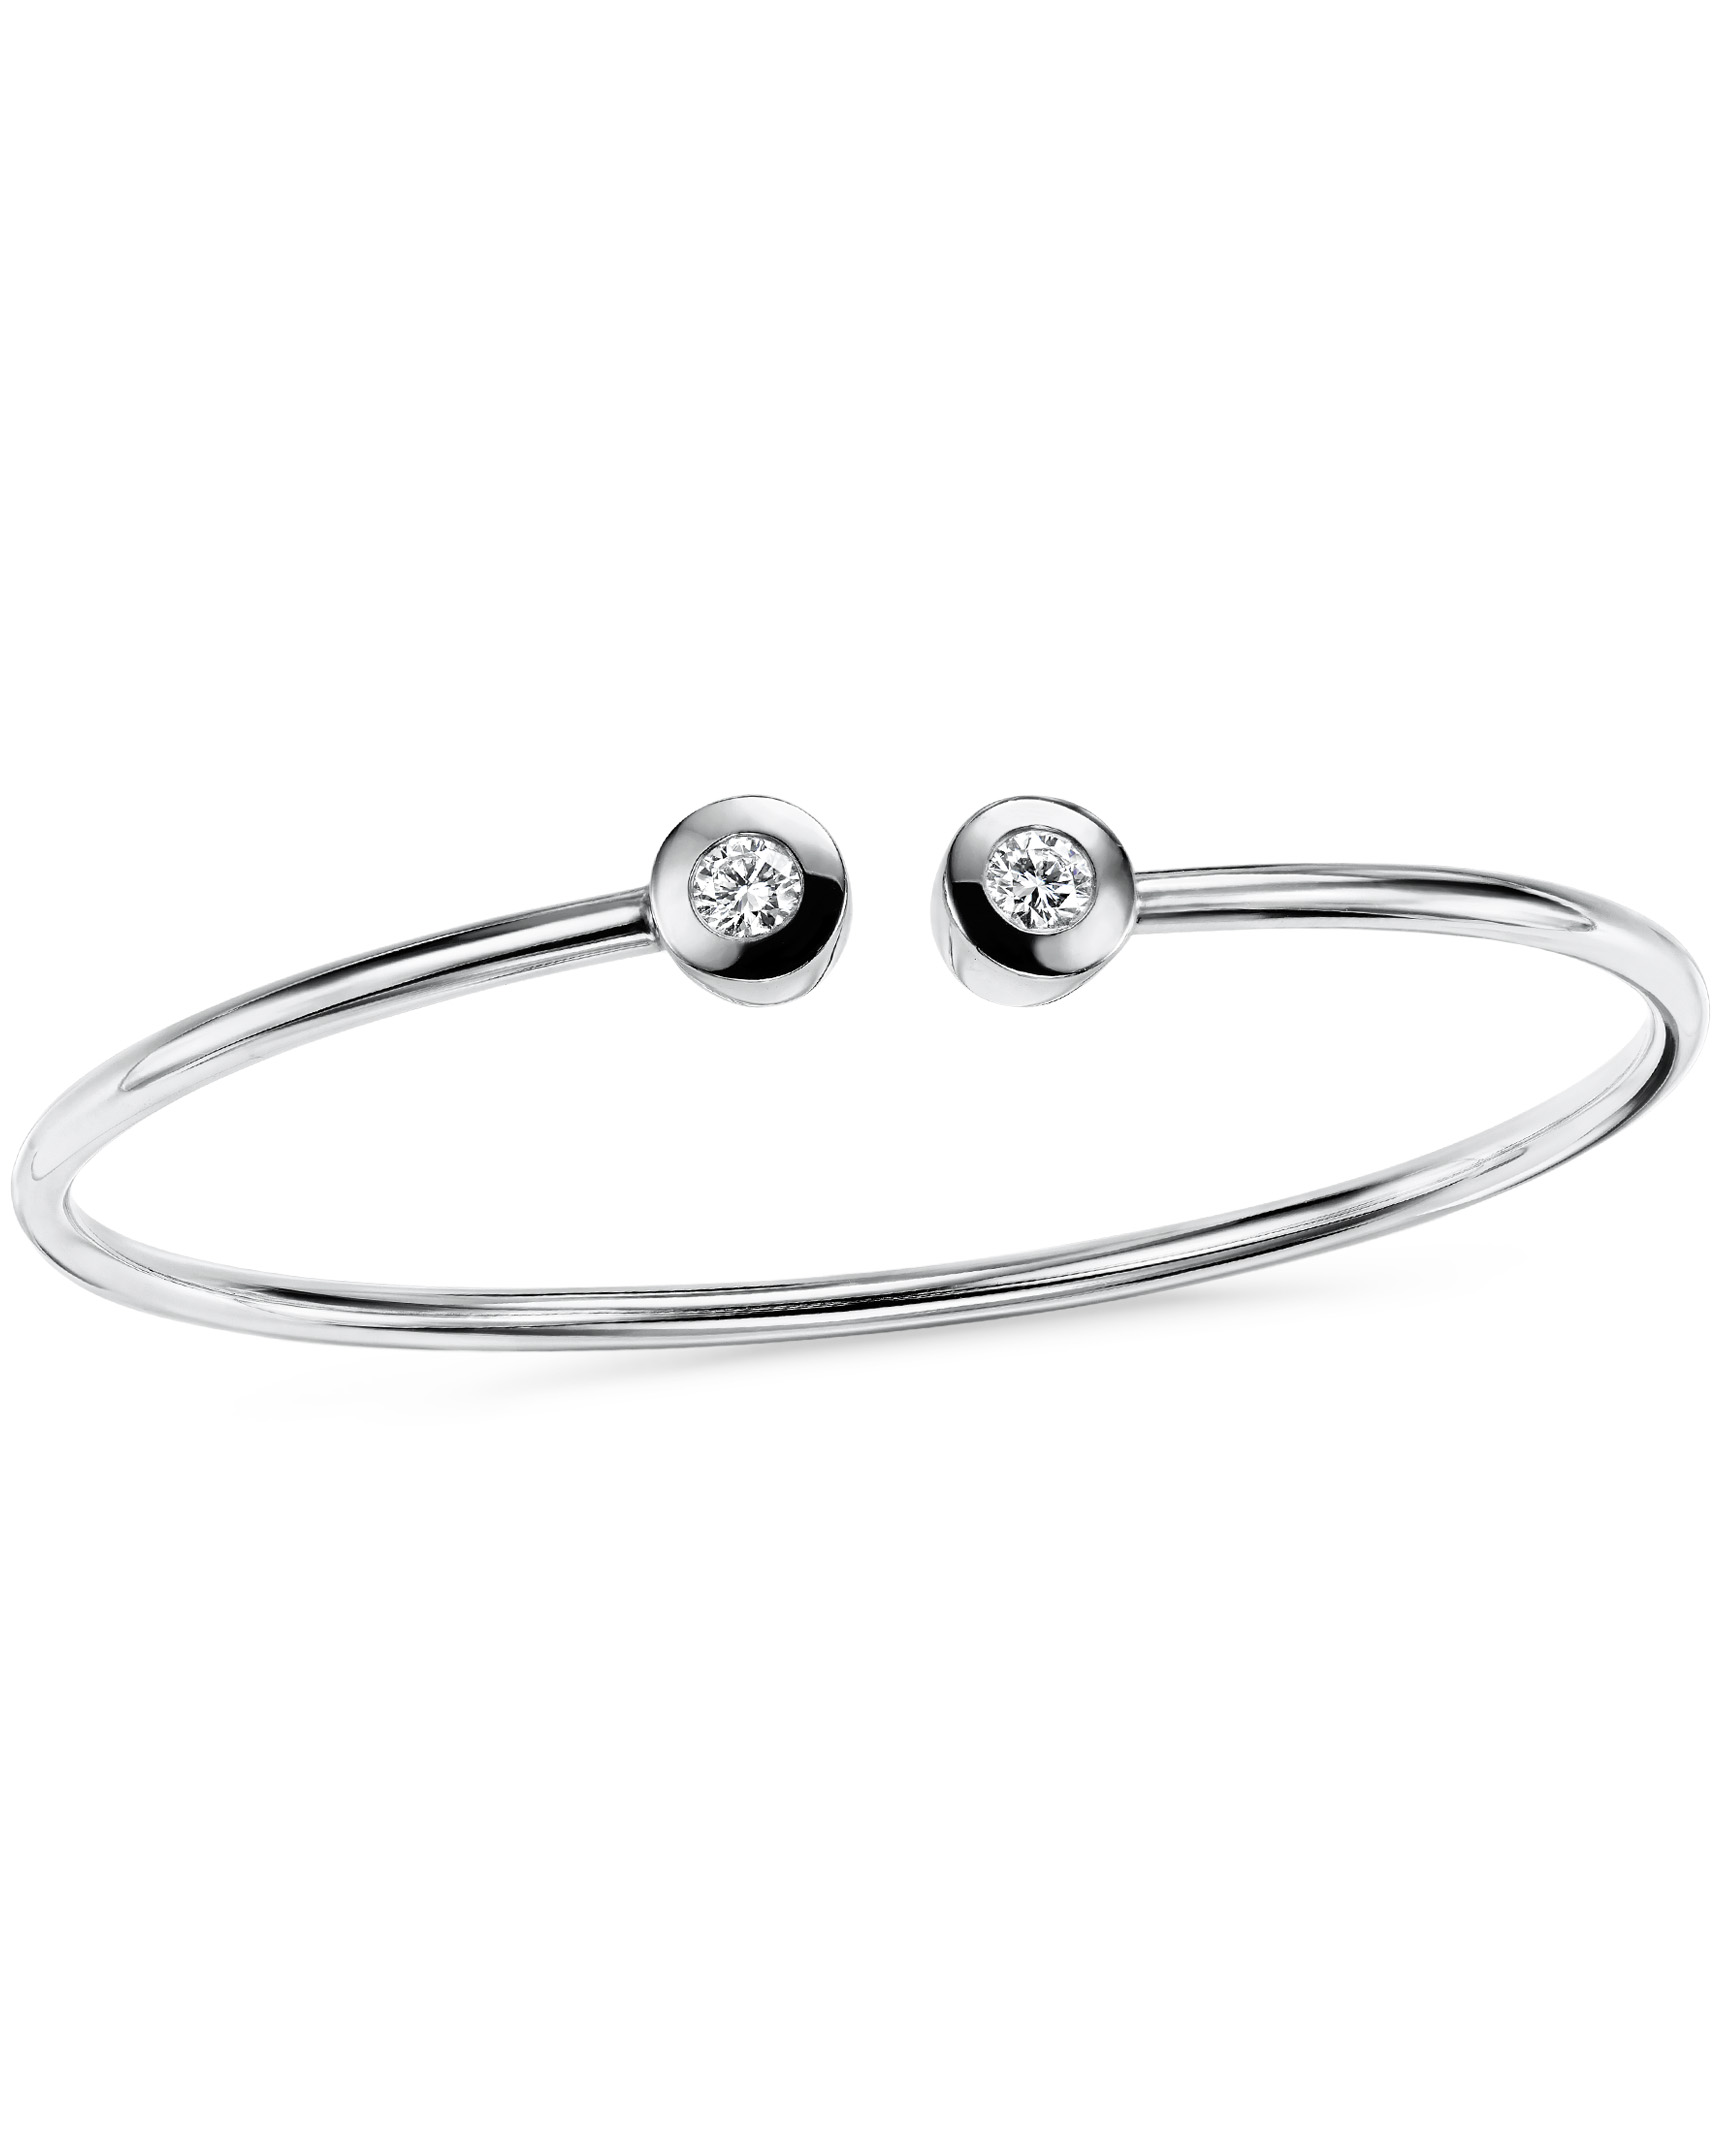 Pandora Sterling Silver Bangle Bracelet